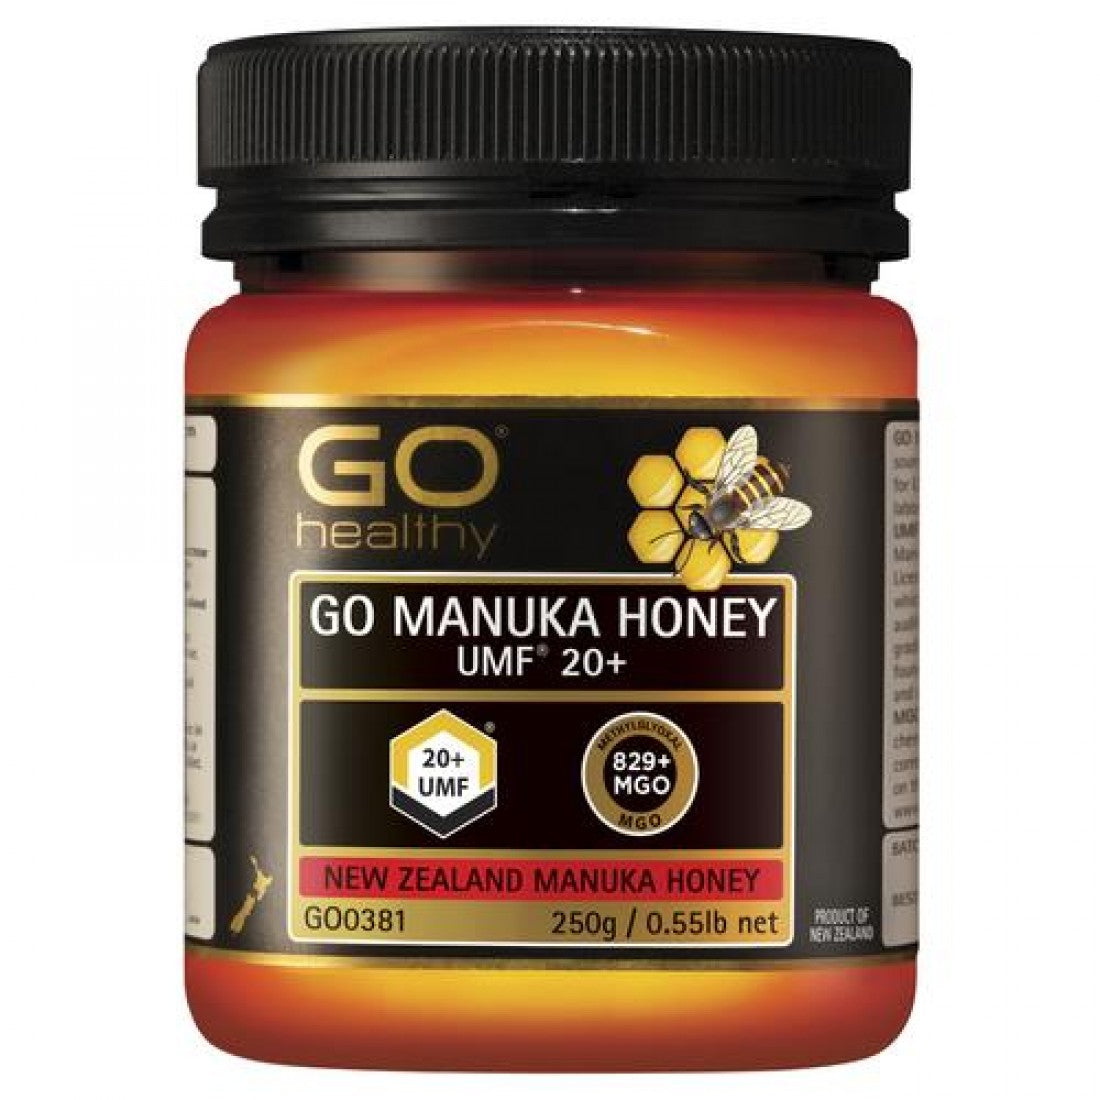 Go Healthy manuka honey UMF20+ (MGO829+) 250g gm